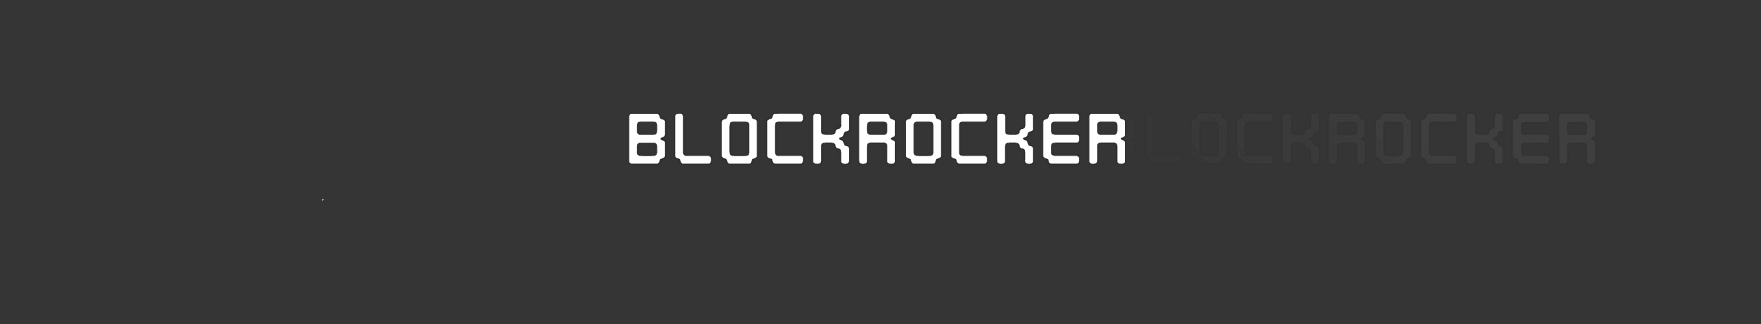 Blockrocker banner